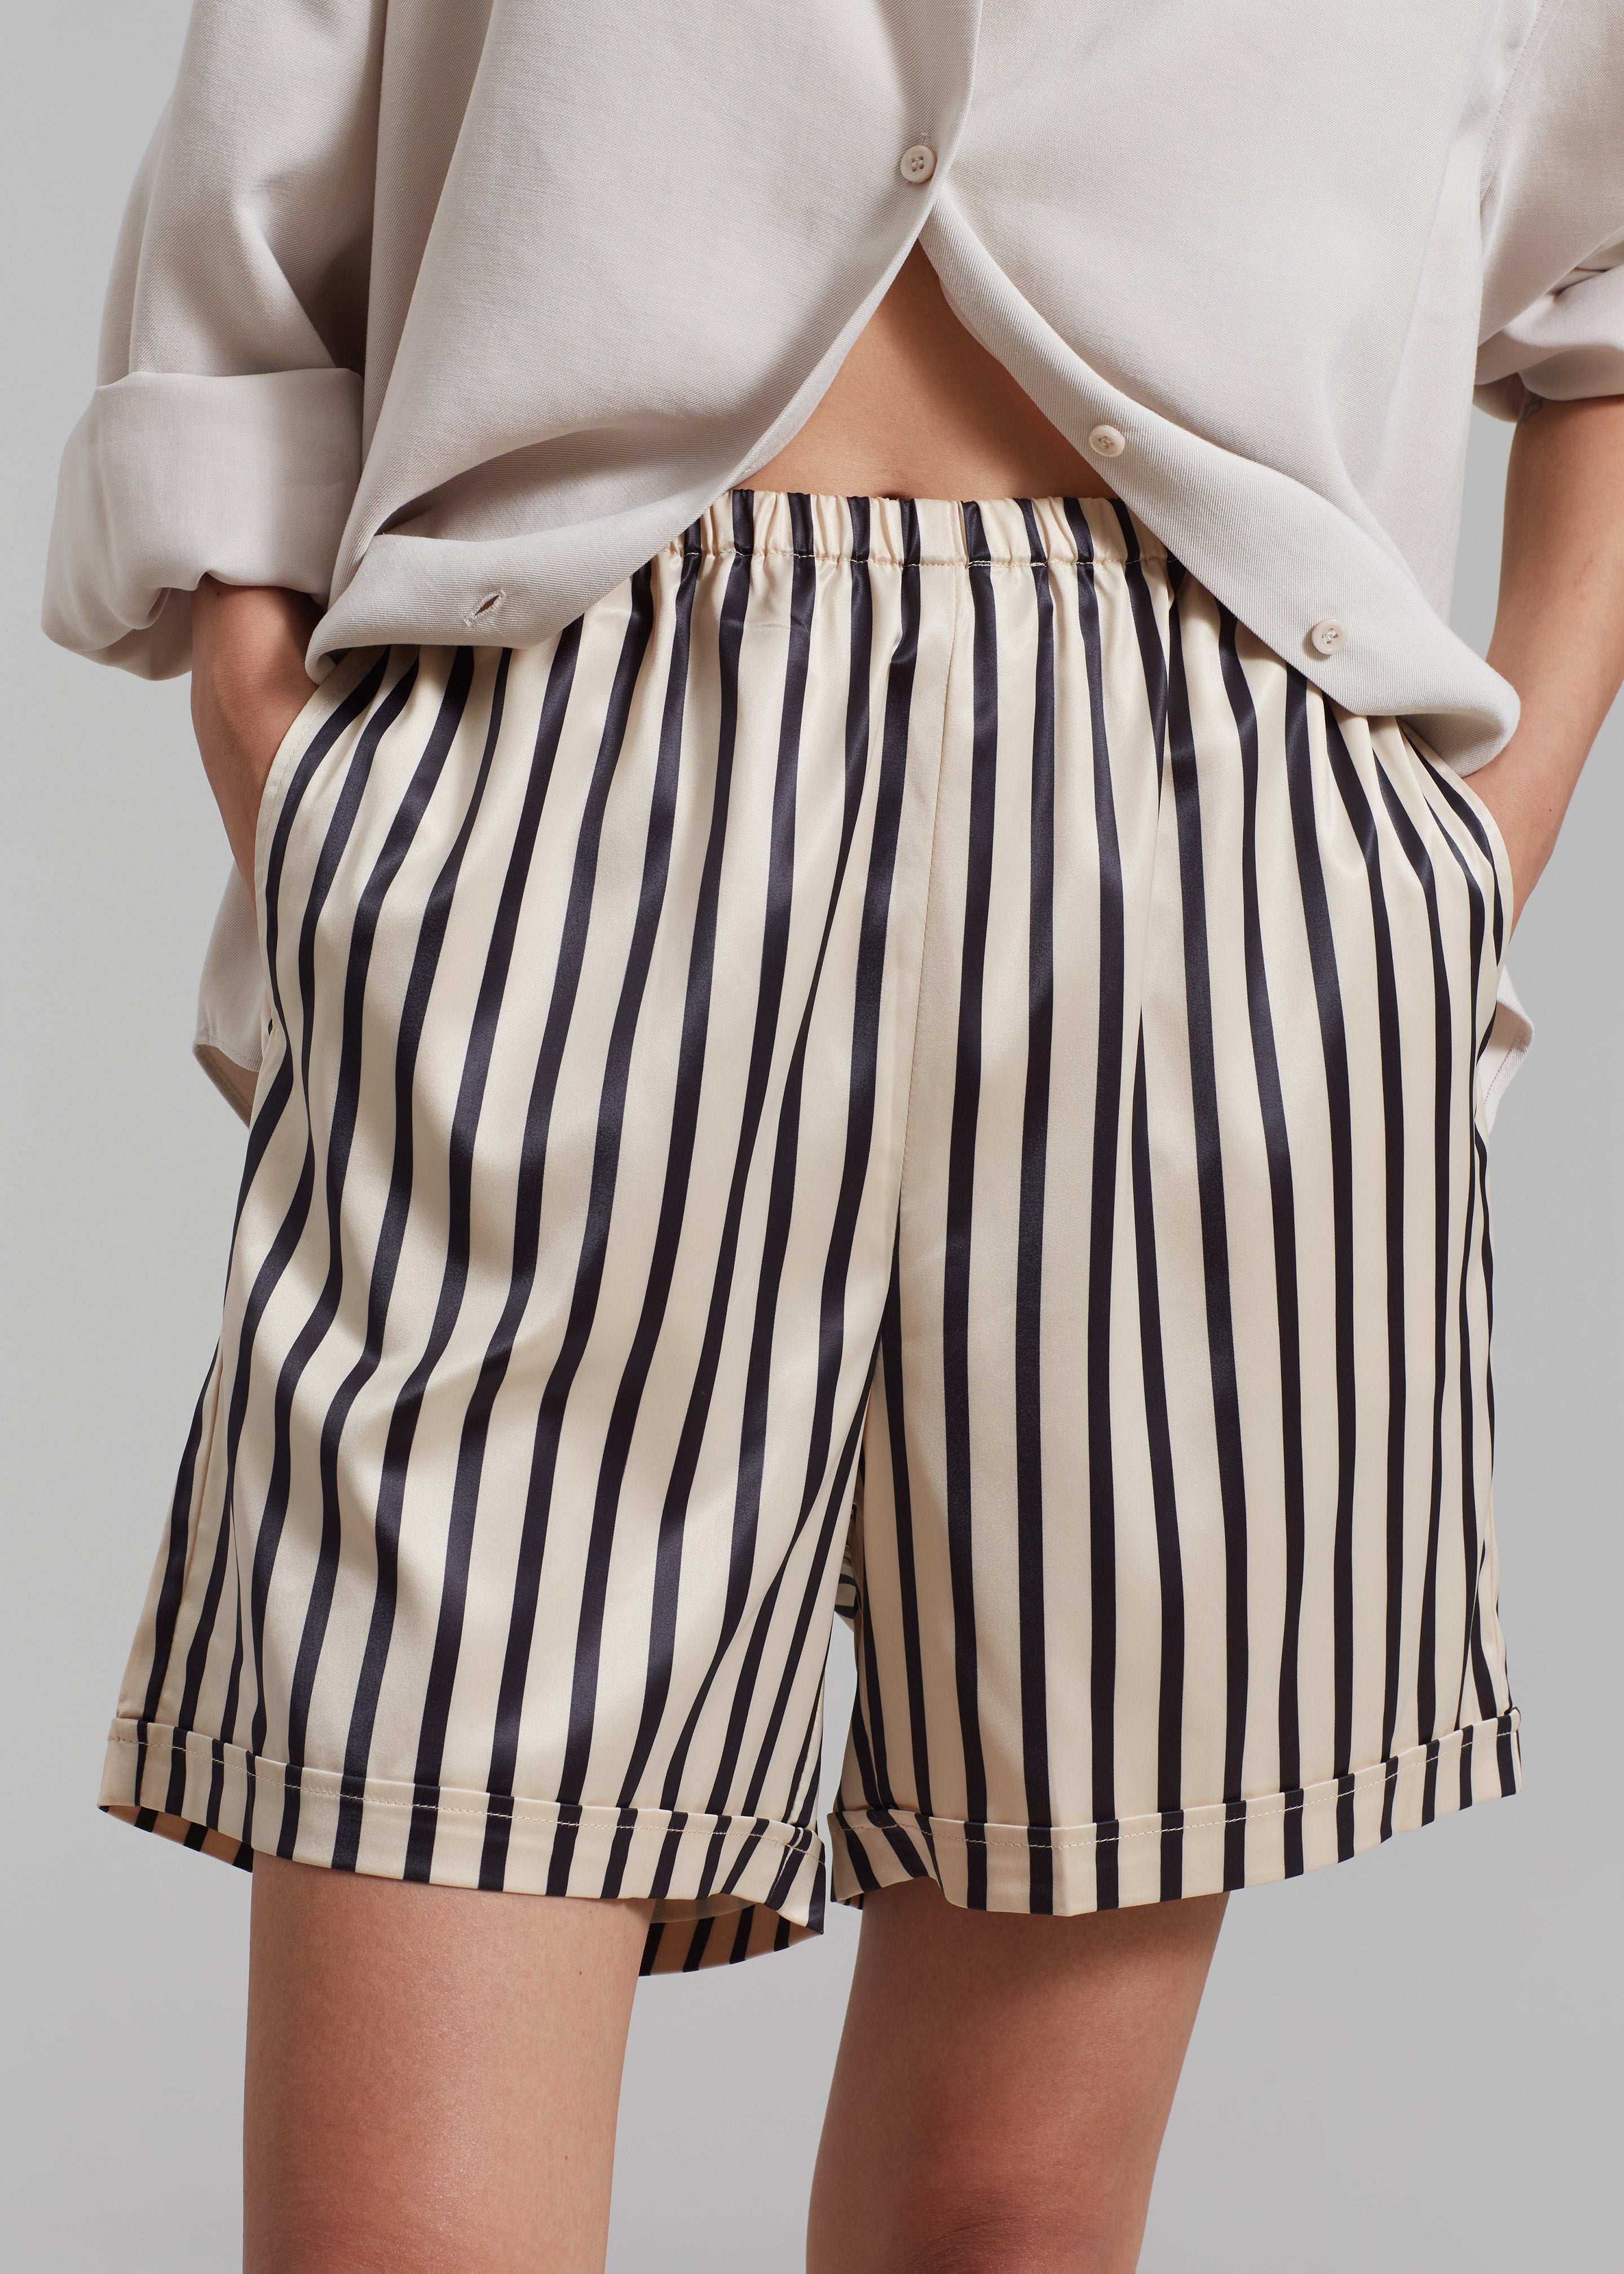 Solaqua Silk Shorts - Ecru with Black Stripes - 3